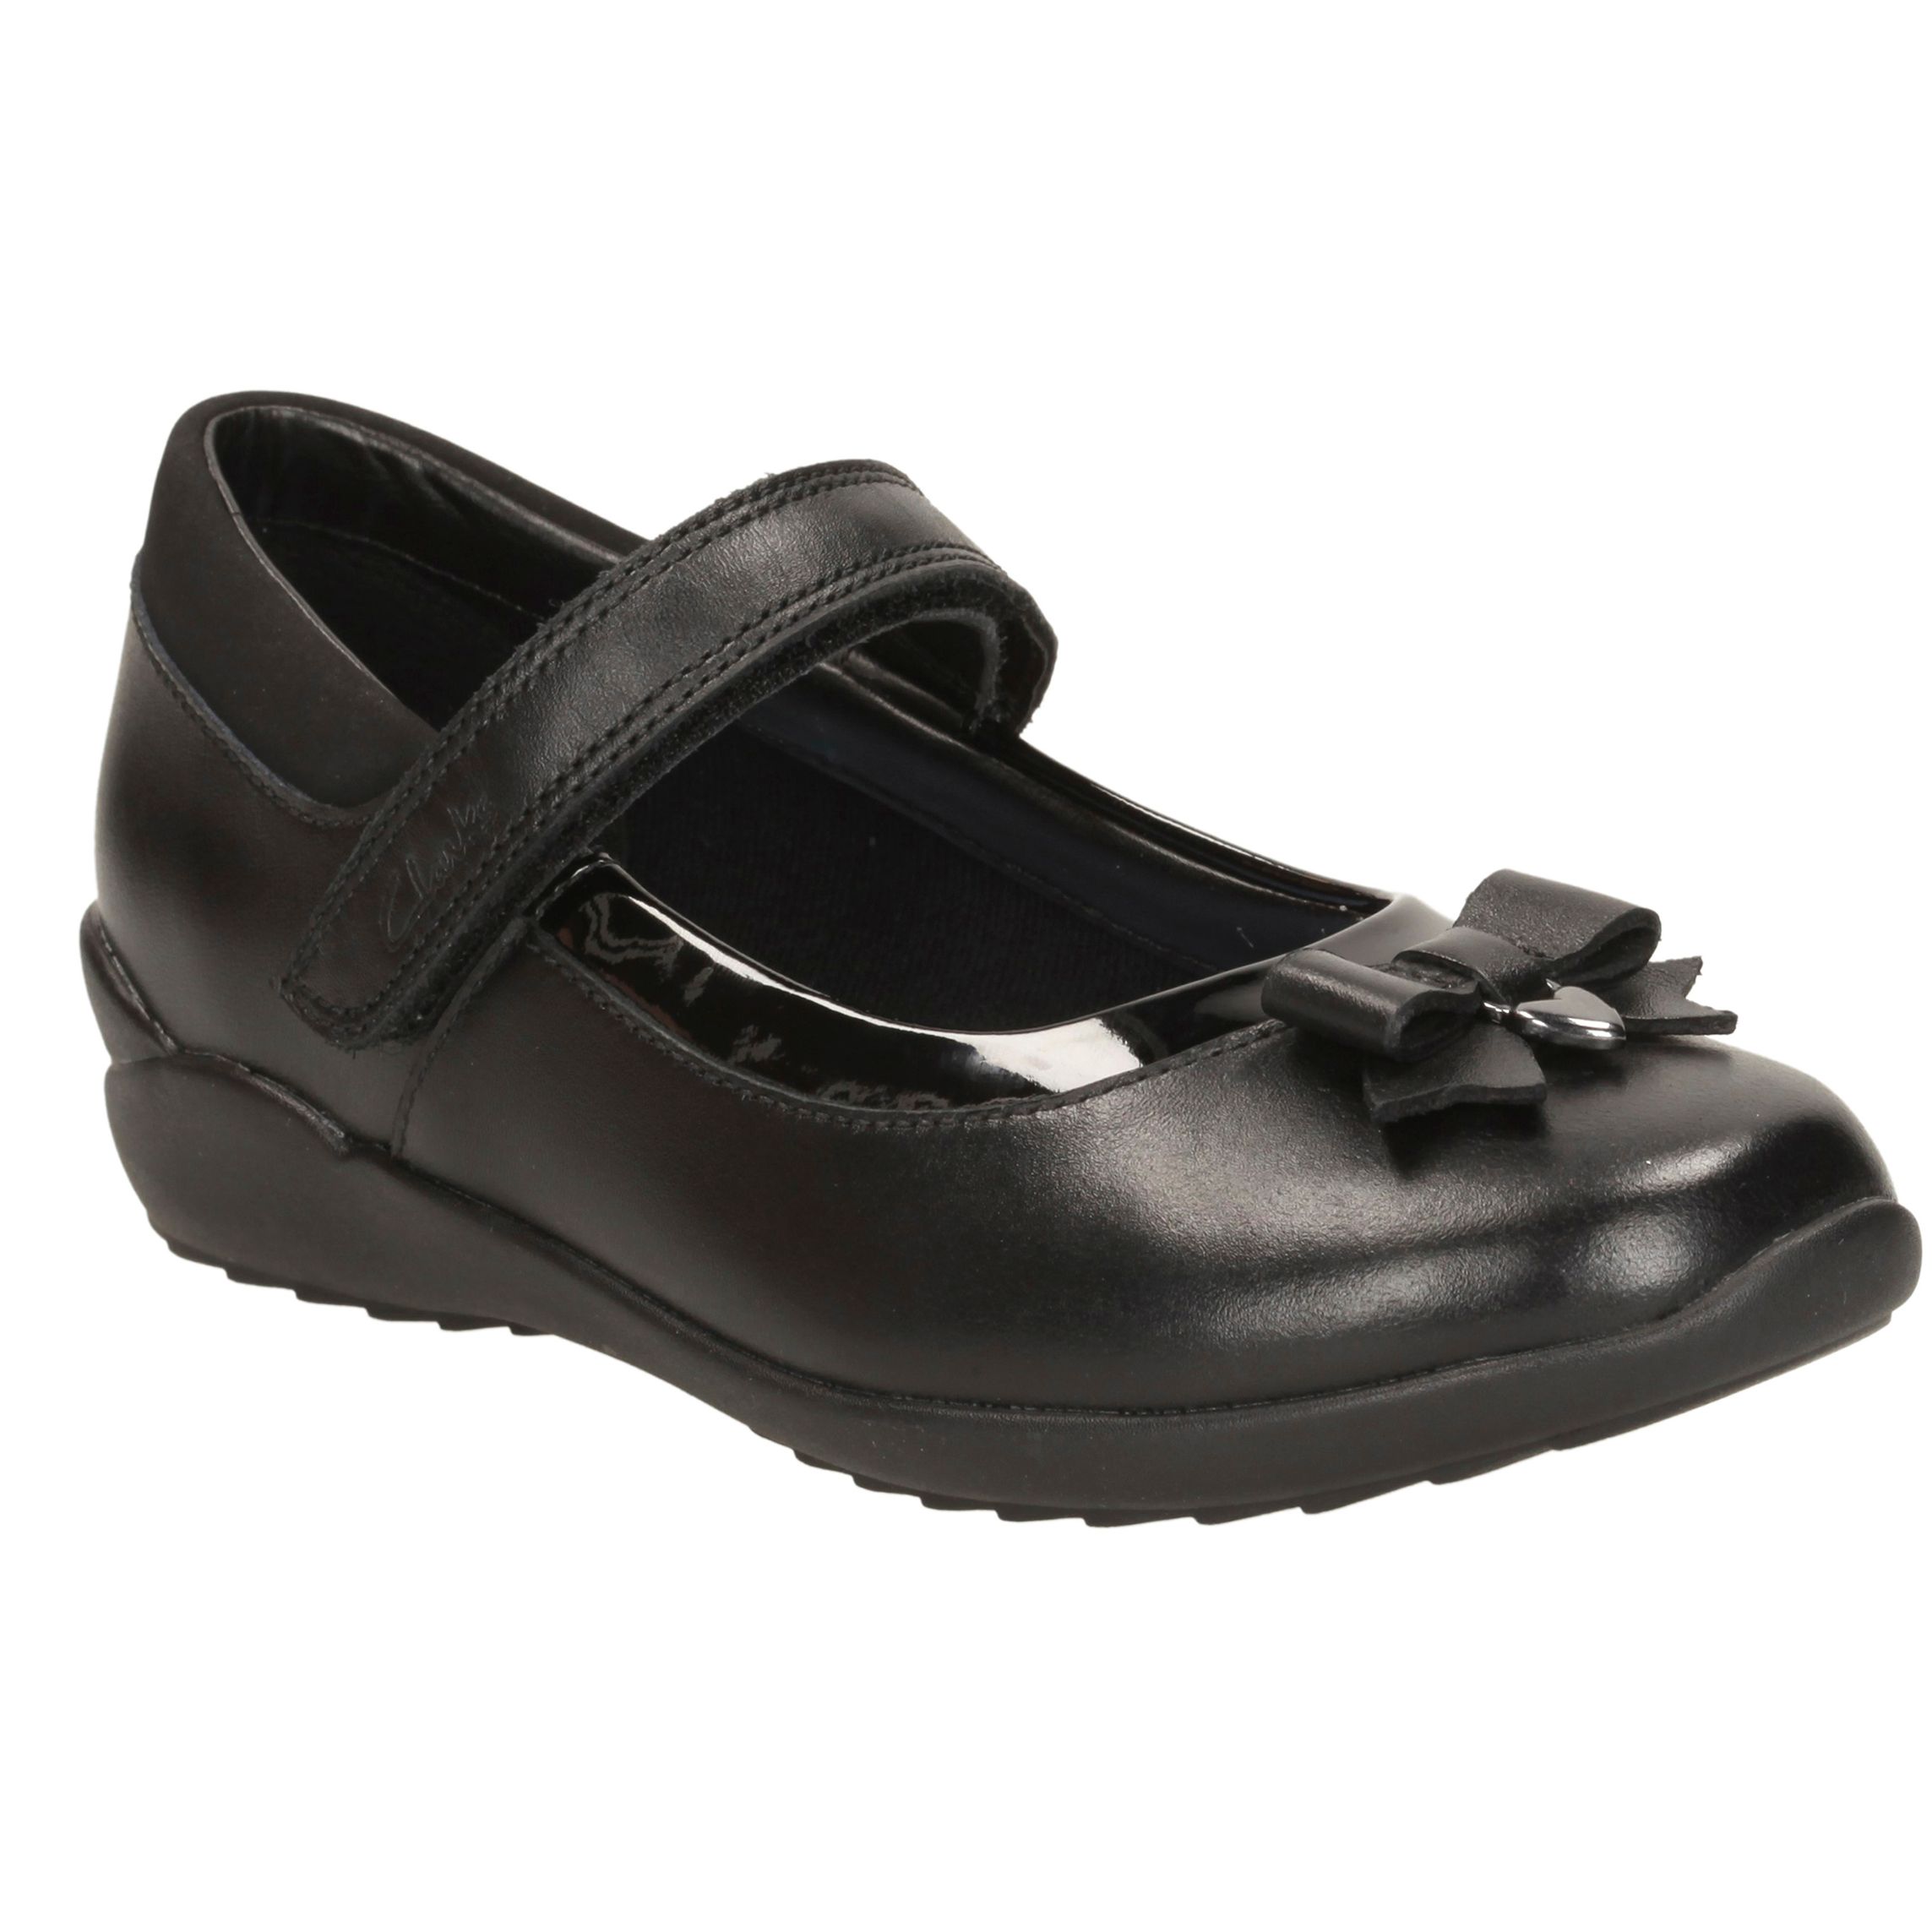 gloform school shoes off 75% - online 